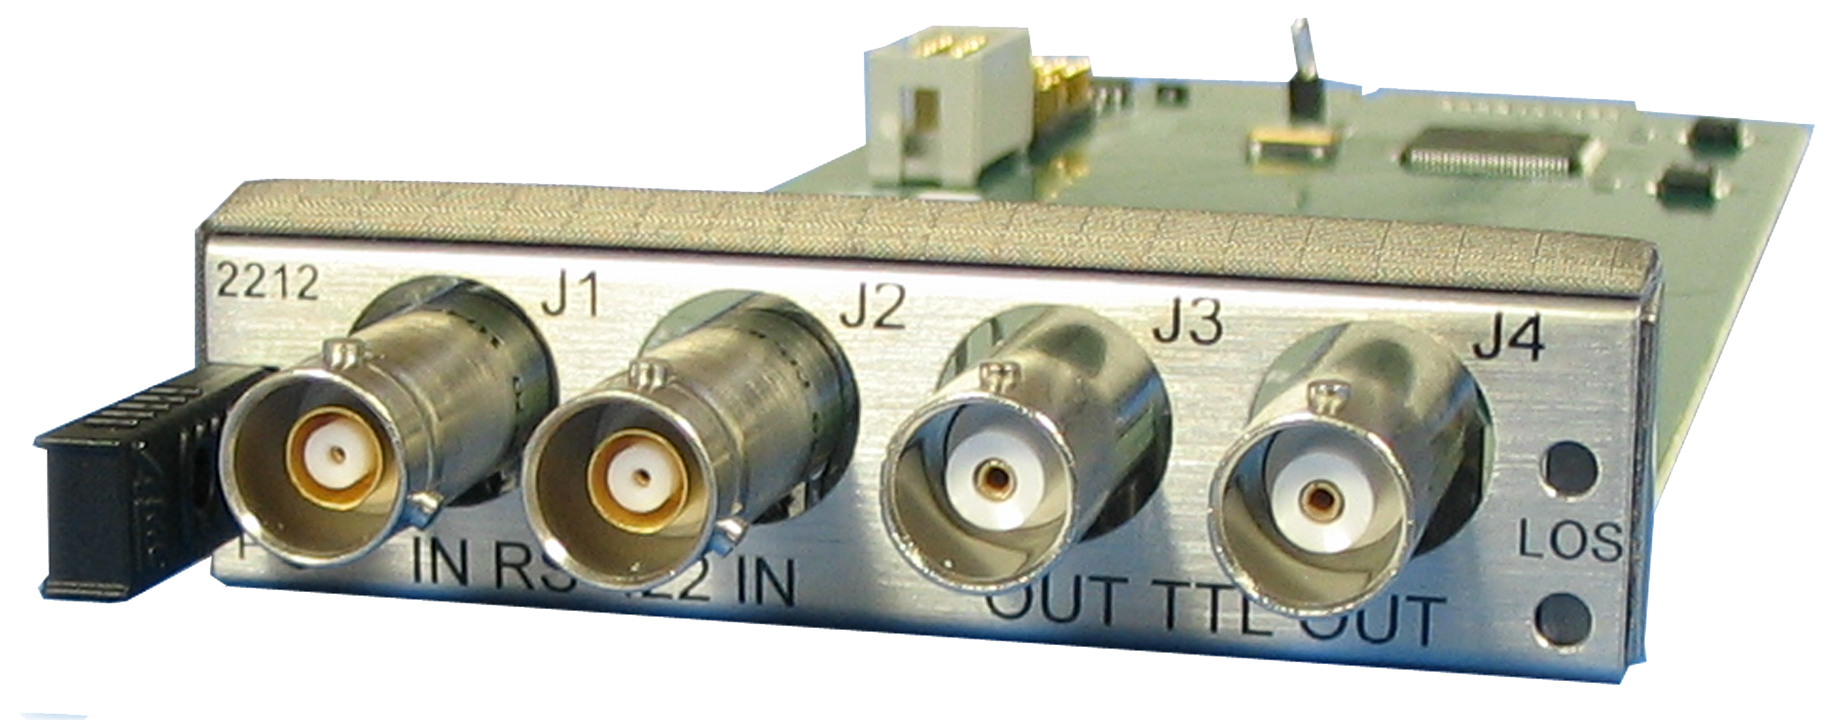 Model 9200-2212 2 RS-422 Input / 2 TTL Output Module